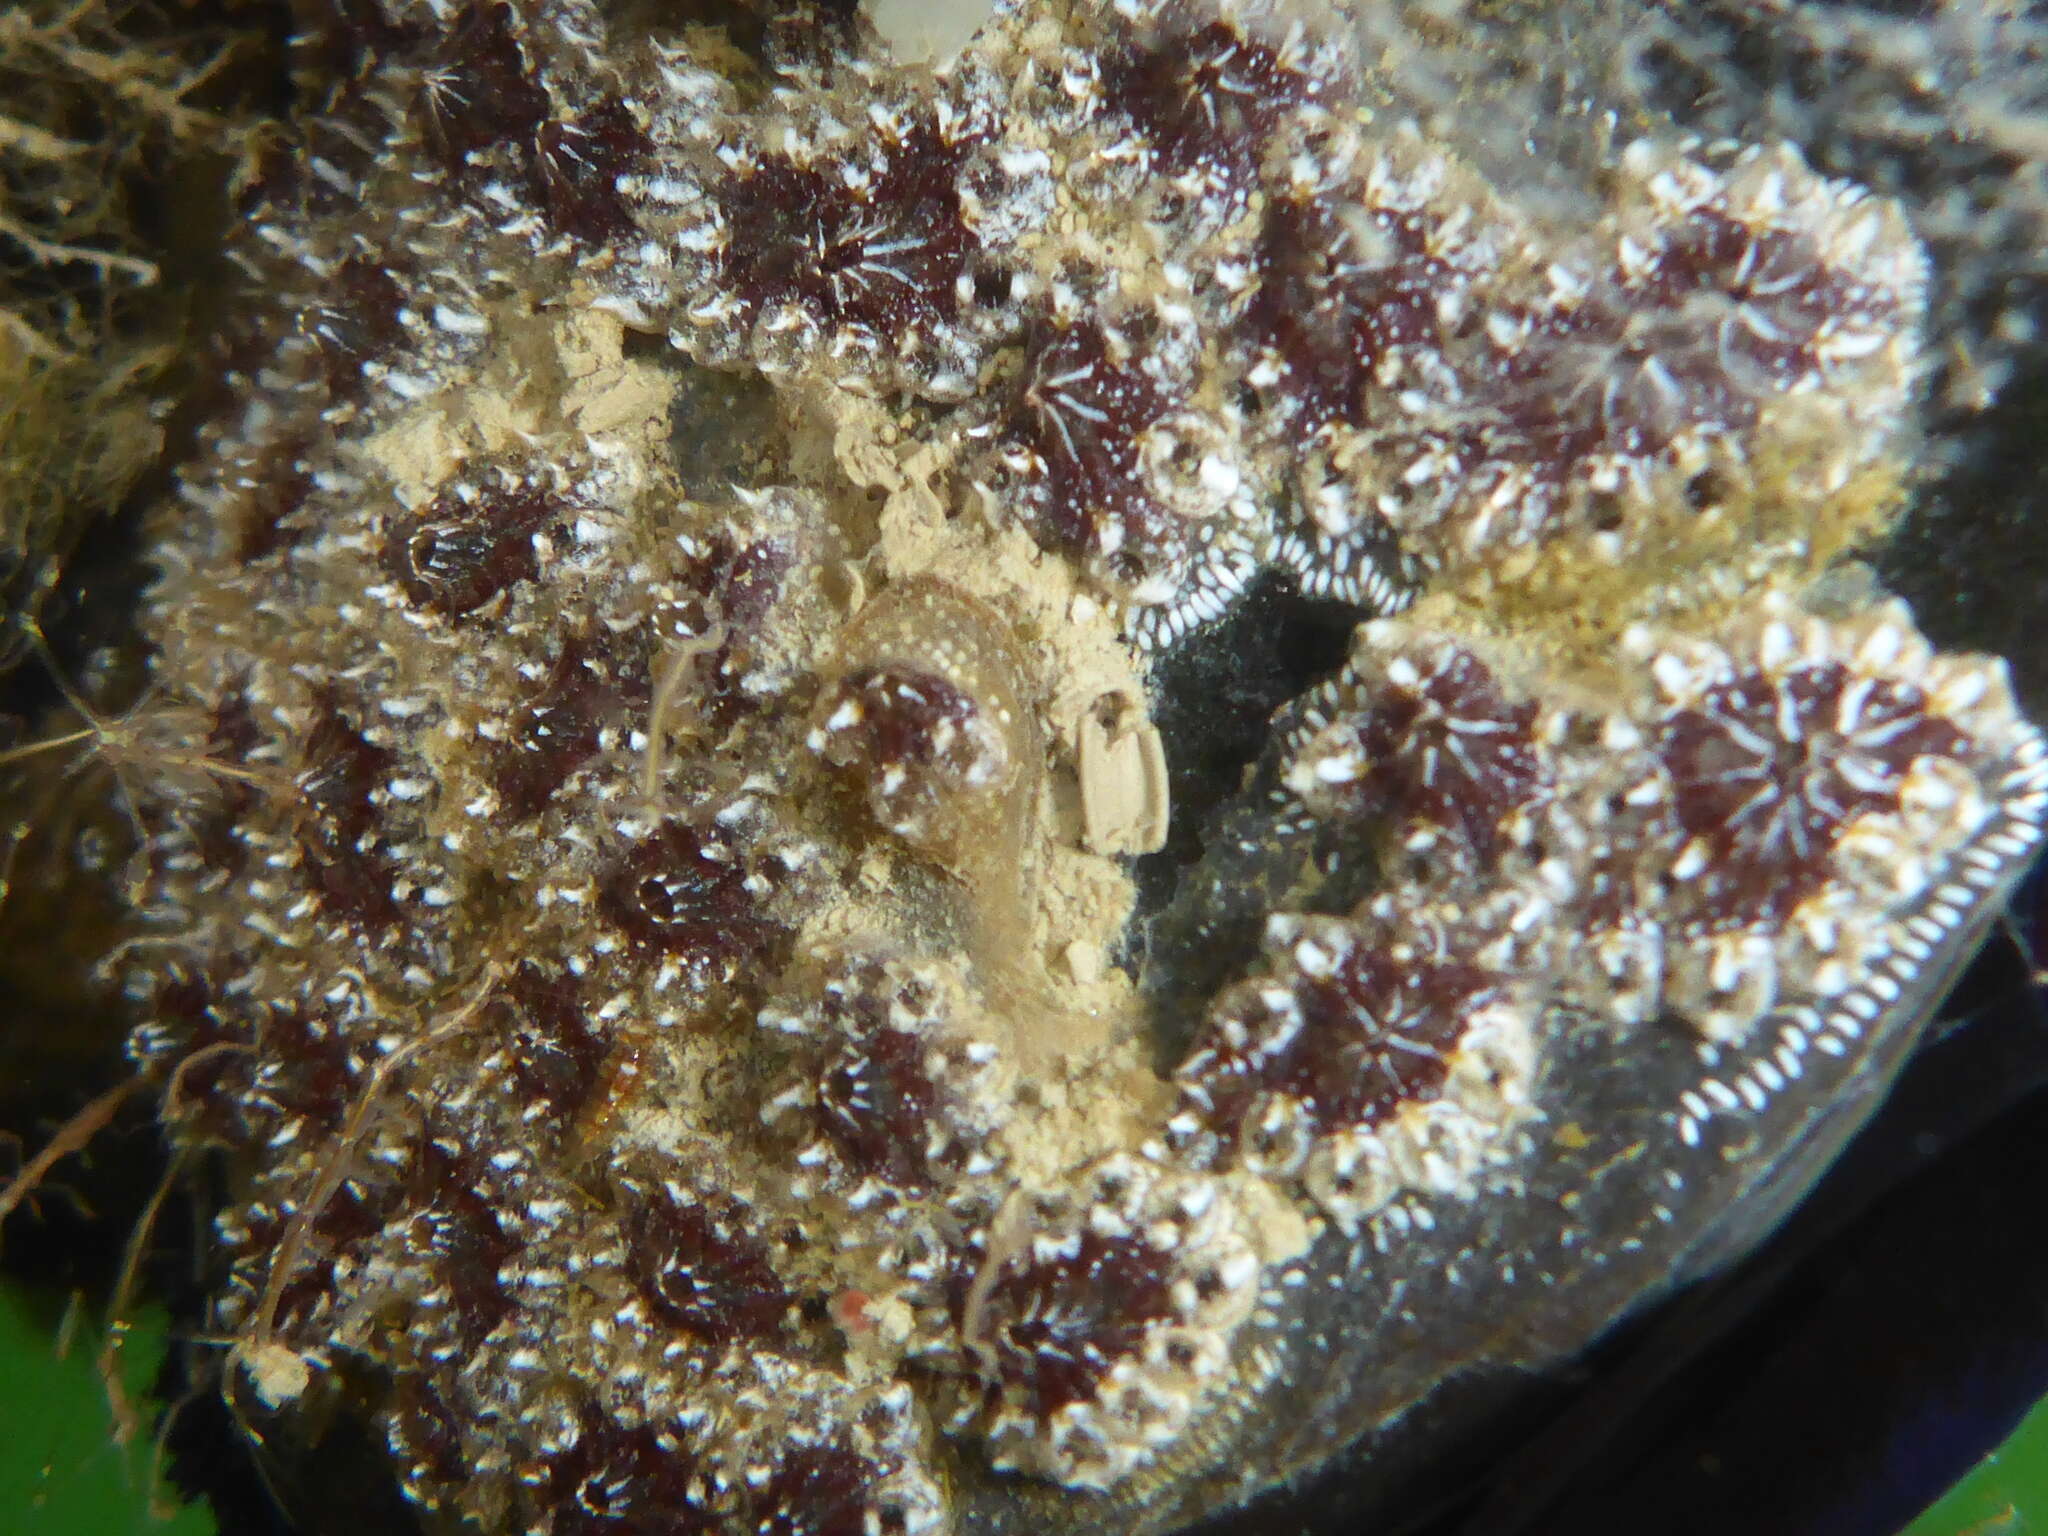 Image of Star ascidian